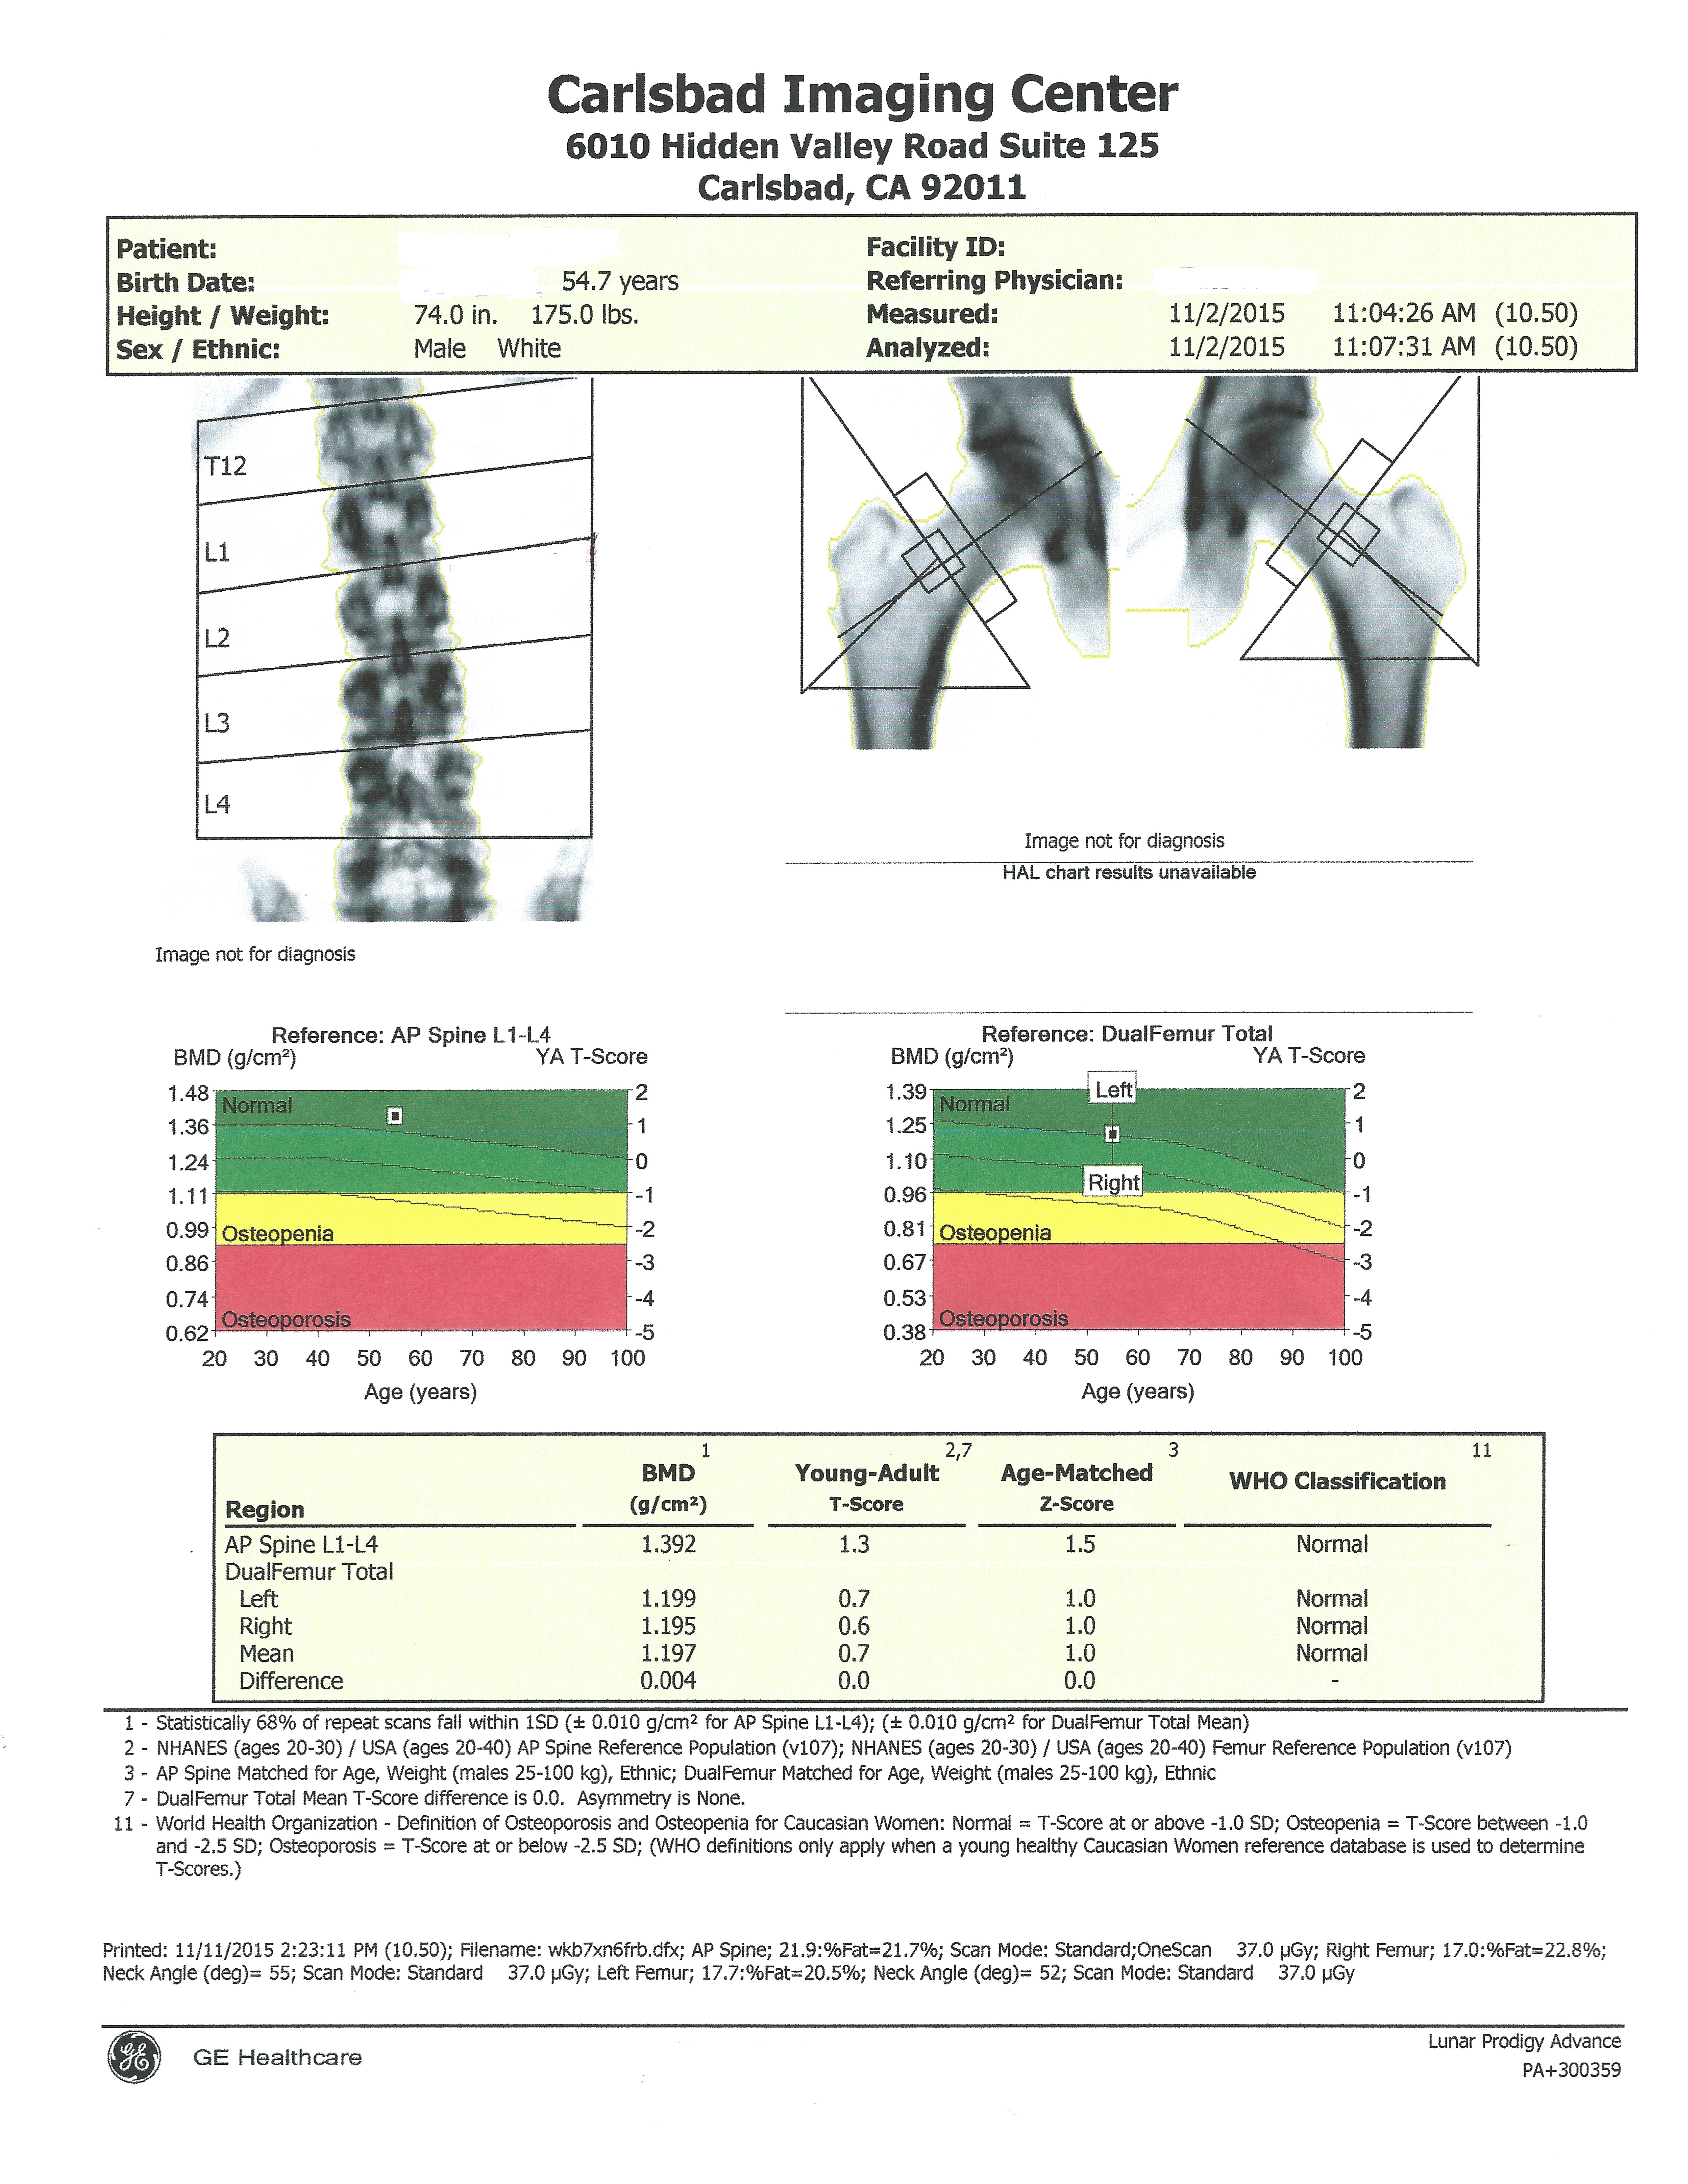 Bone Densitometry/DEXA scan - Carlsbad Imaging Center - Imperial Radiology